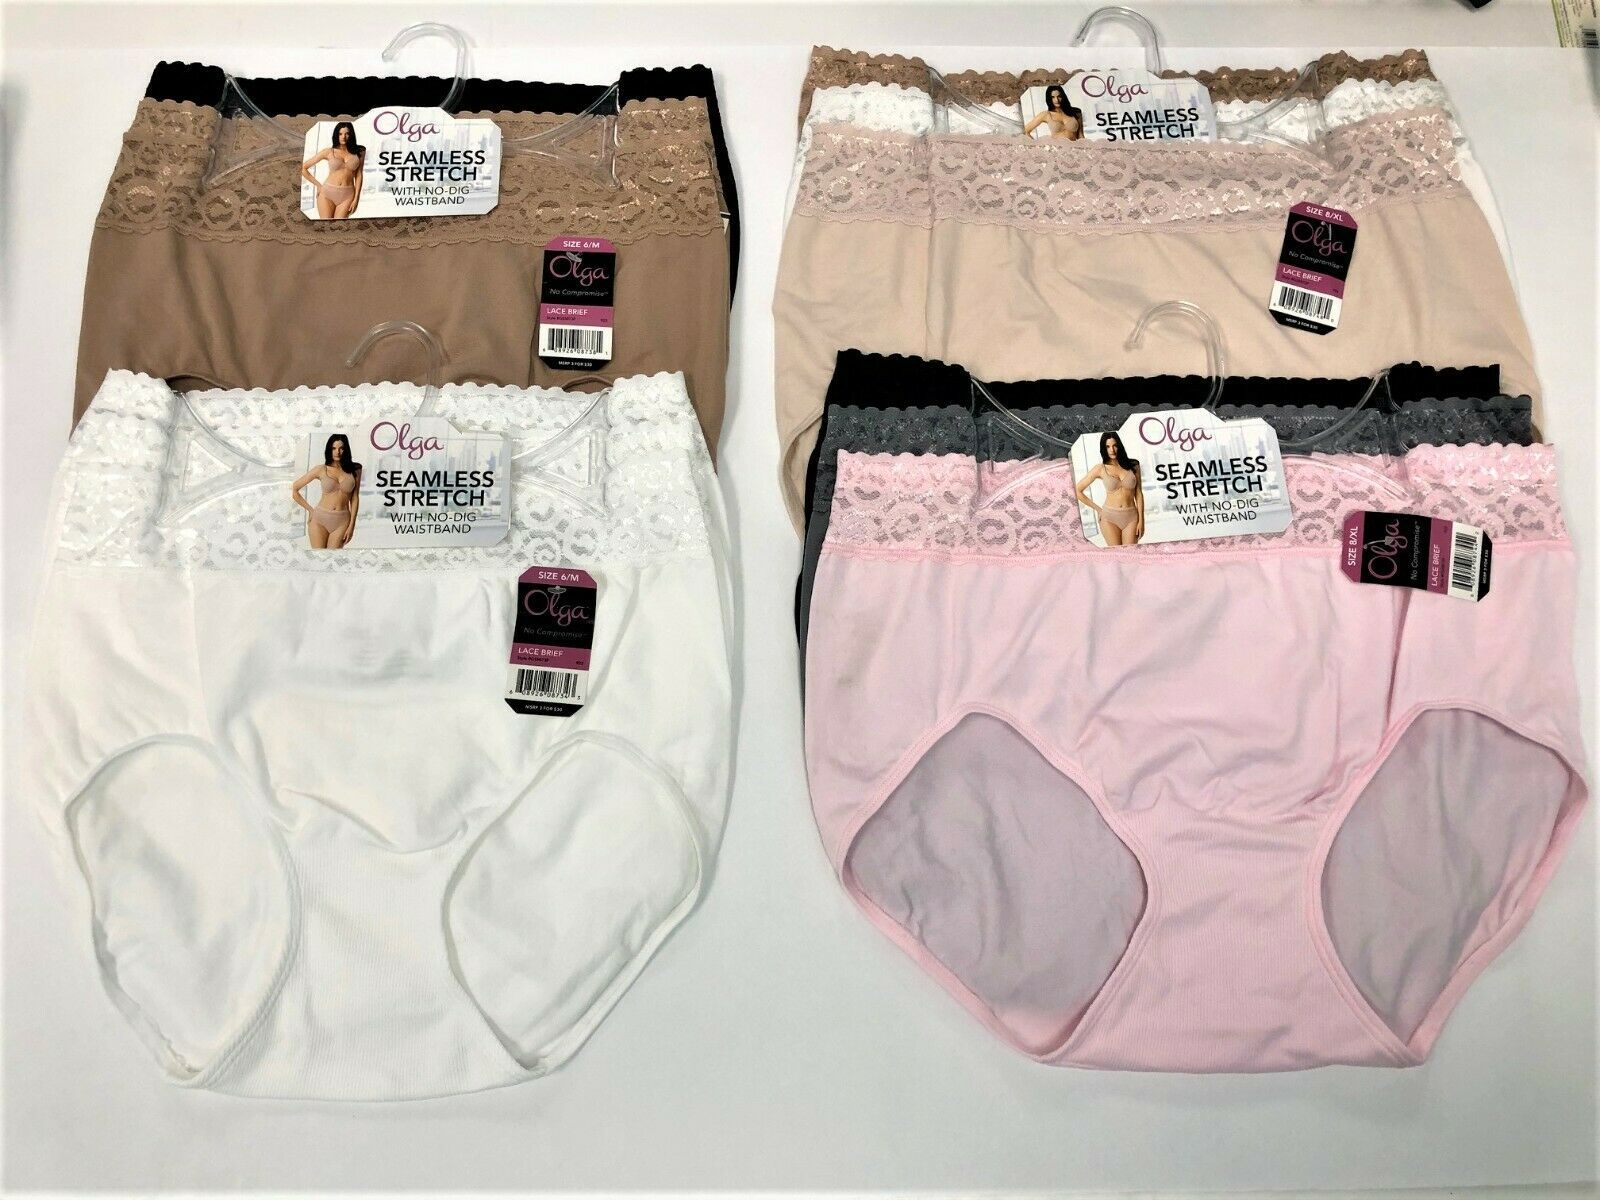 Gap Lace Bikini Undies Stretch Cotton Women's Underwear Panties 1 Pcs NWT